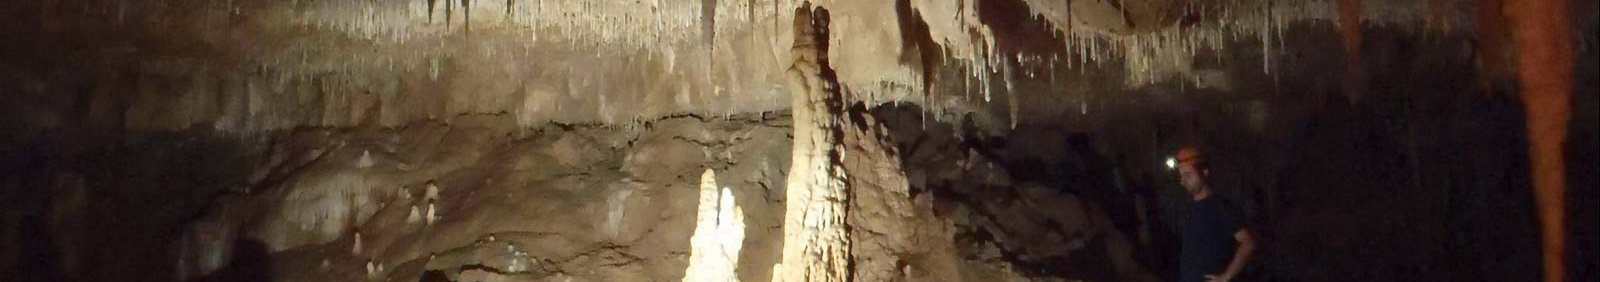 Iran cave tour: Caving in Danyal cave